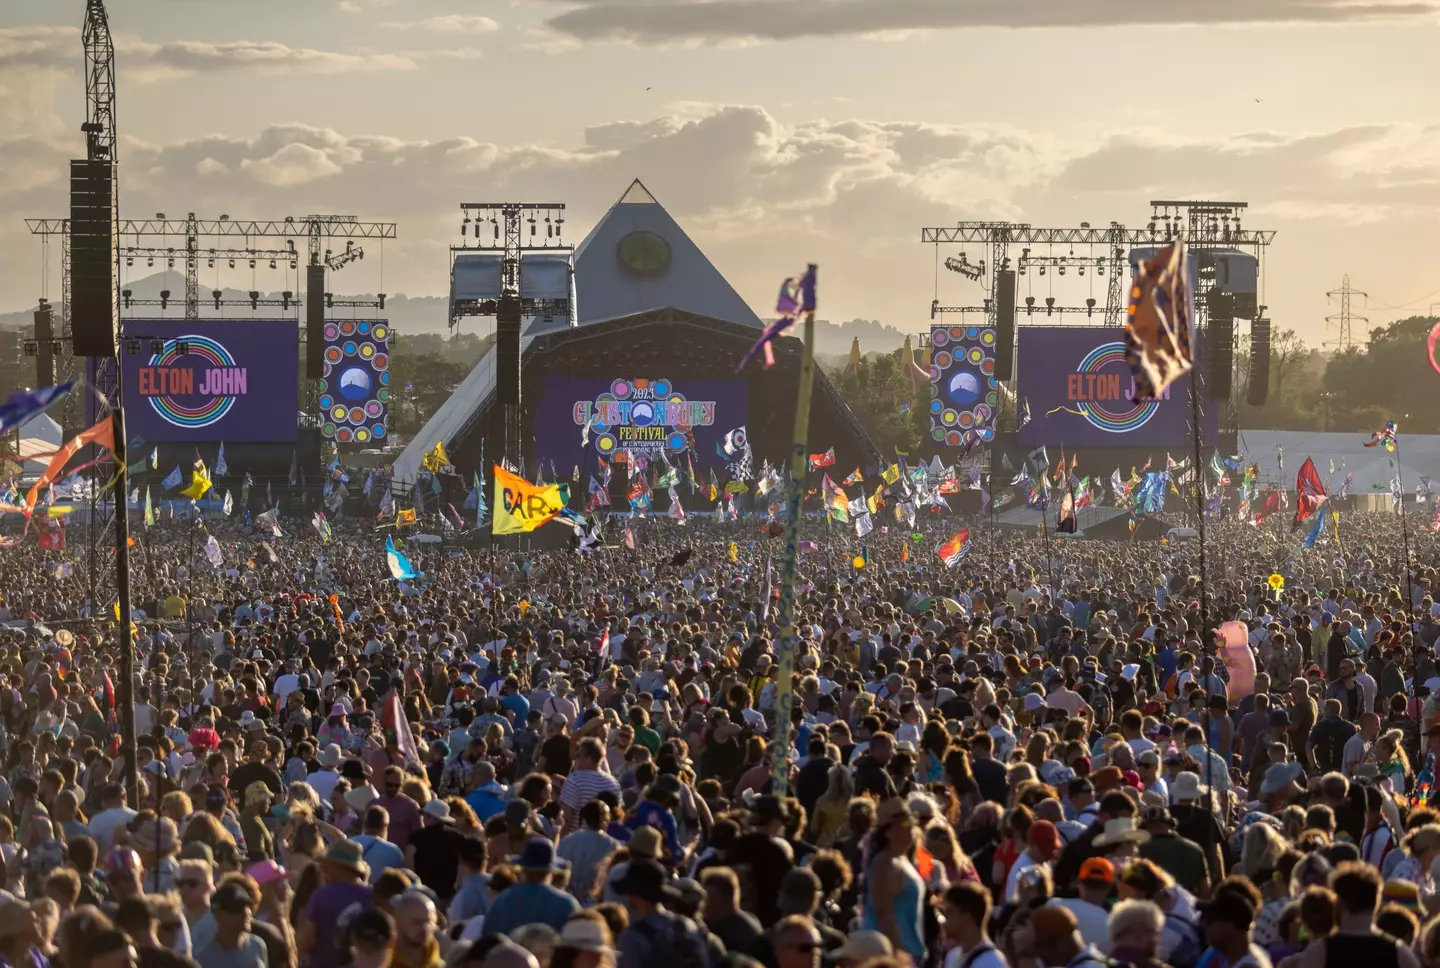 Glastonbury is set to host 200,000 festival-goers. (Matt Cardy/Getty Images)